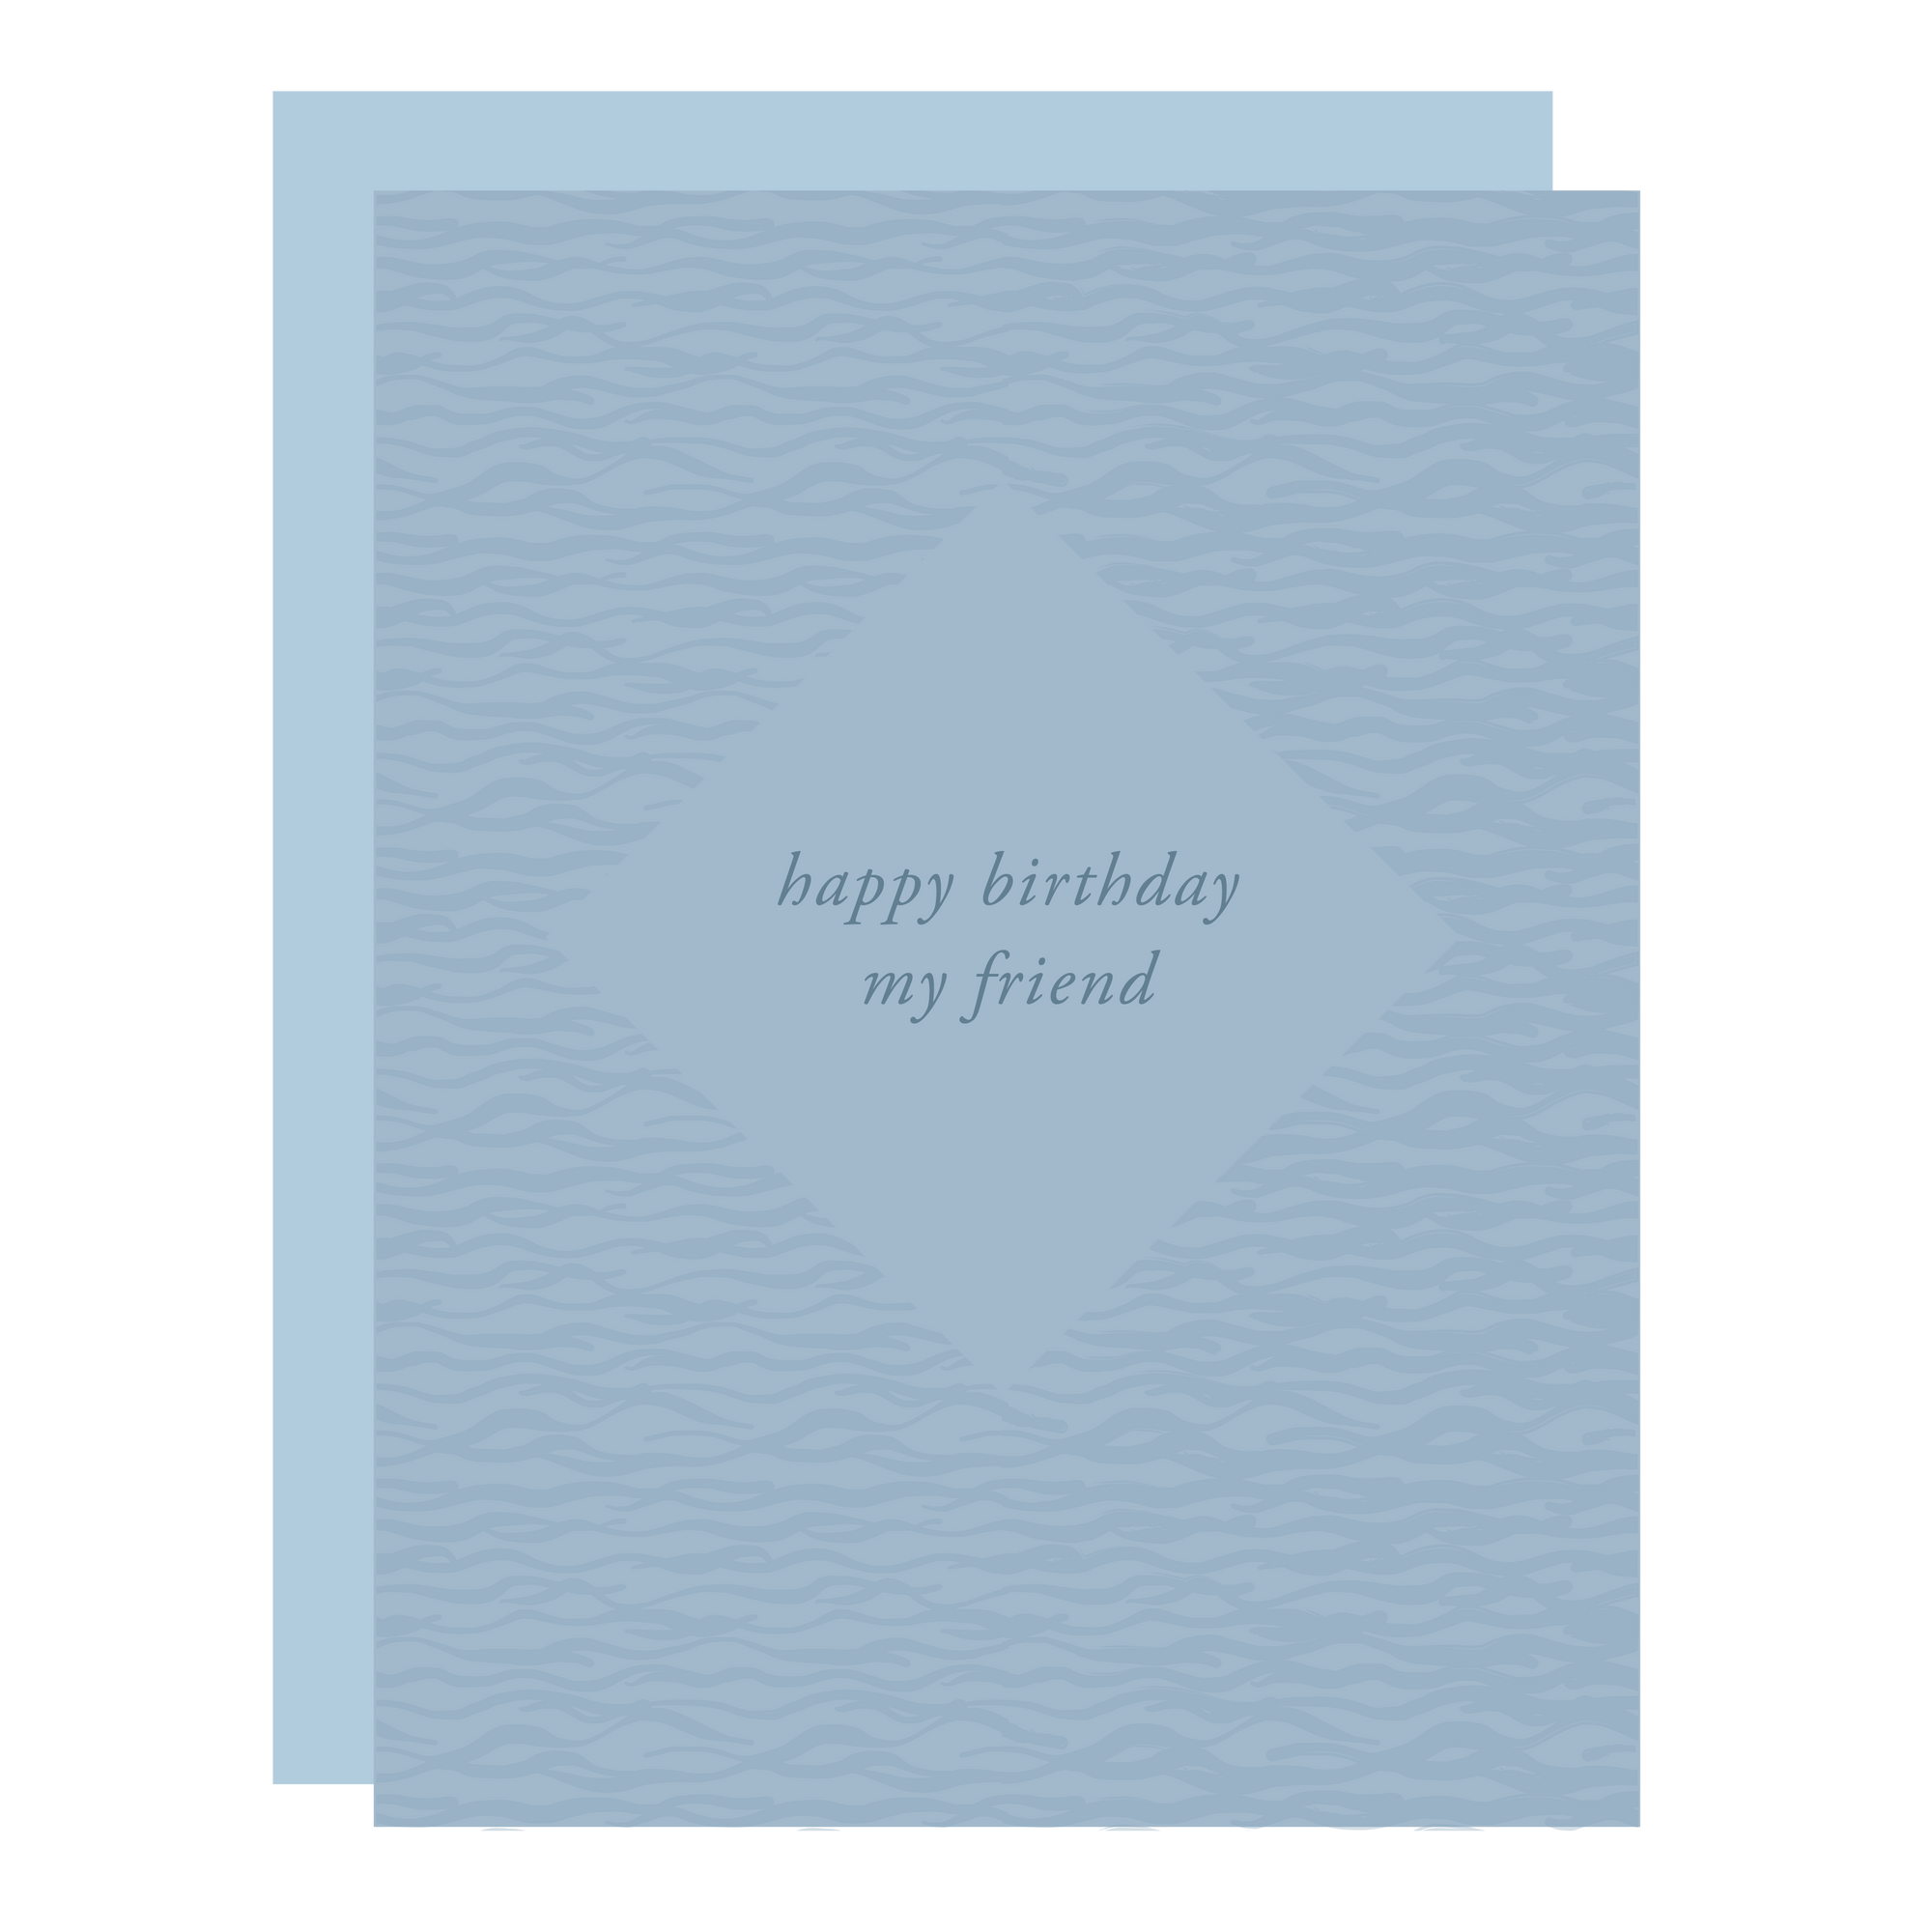 "Happy Birthday My Friend" birthday card, letterpress printed by hand on steel blue paper.